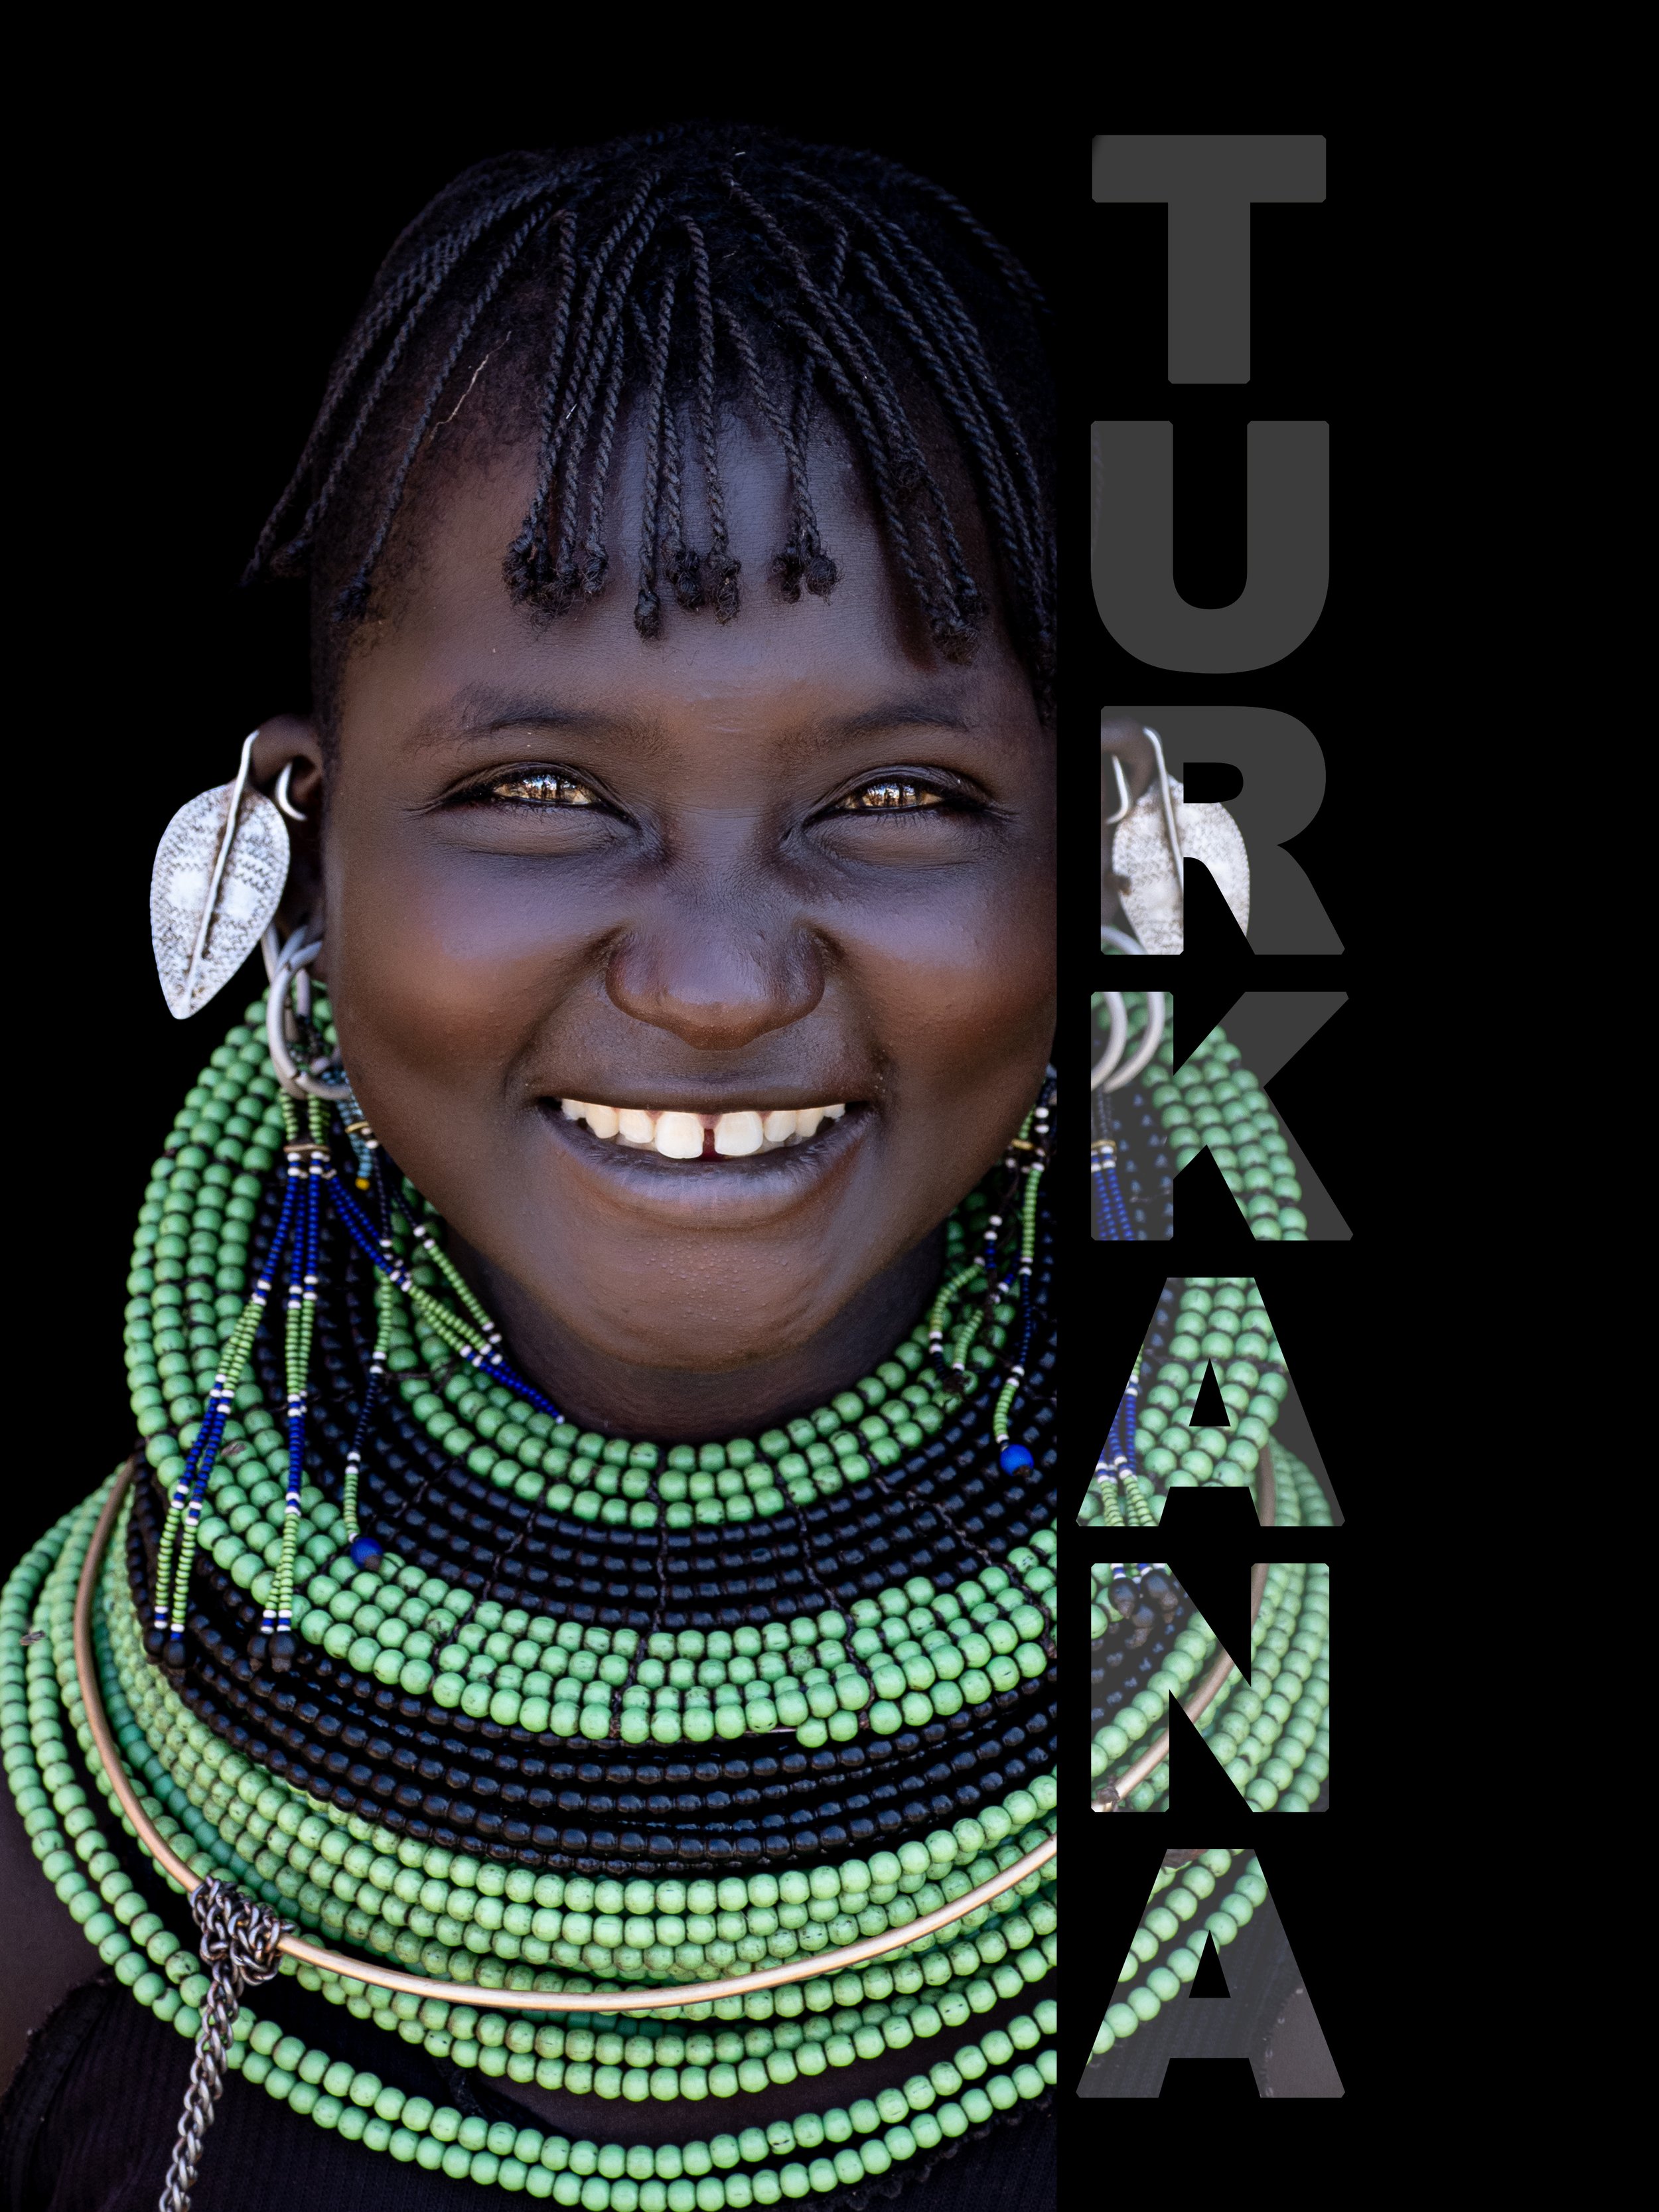 Turkana tribe woman portrait from Kenya tribe photo tours